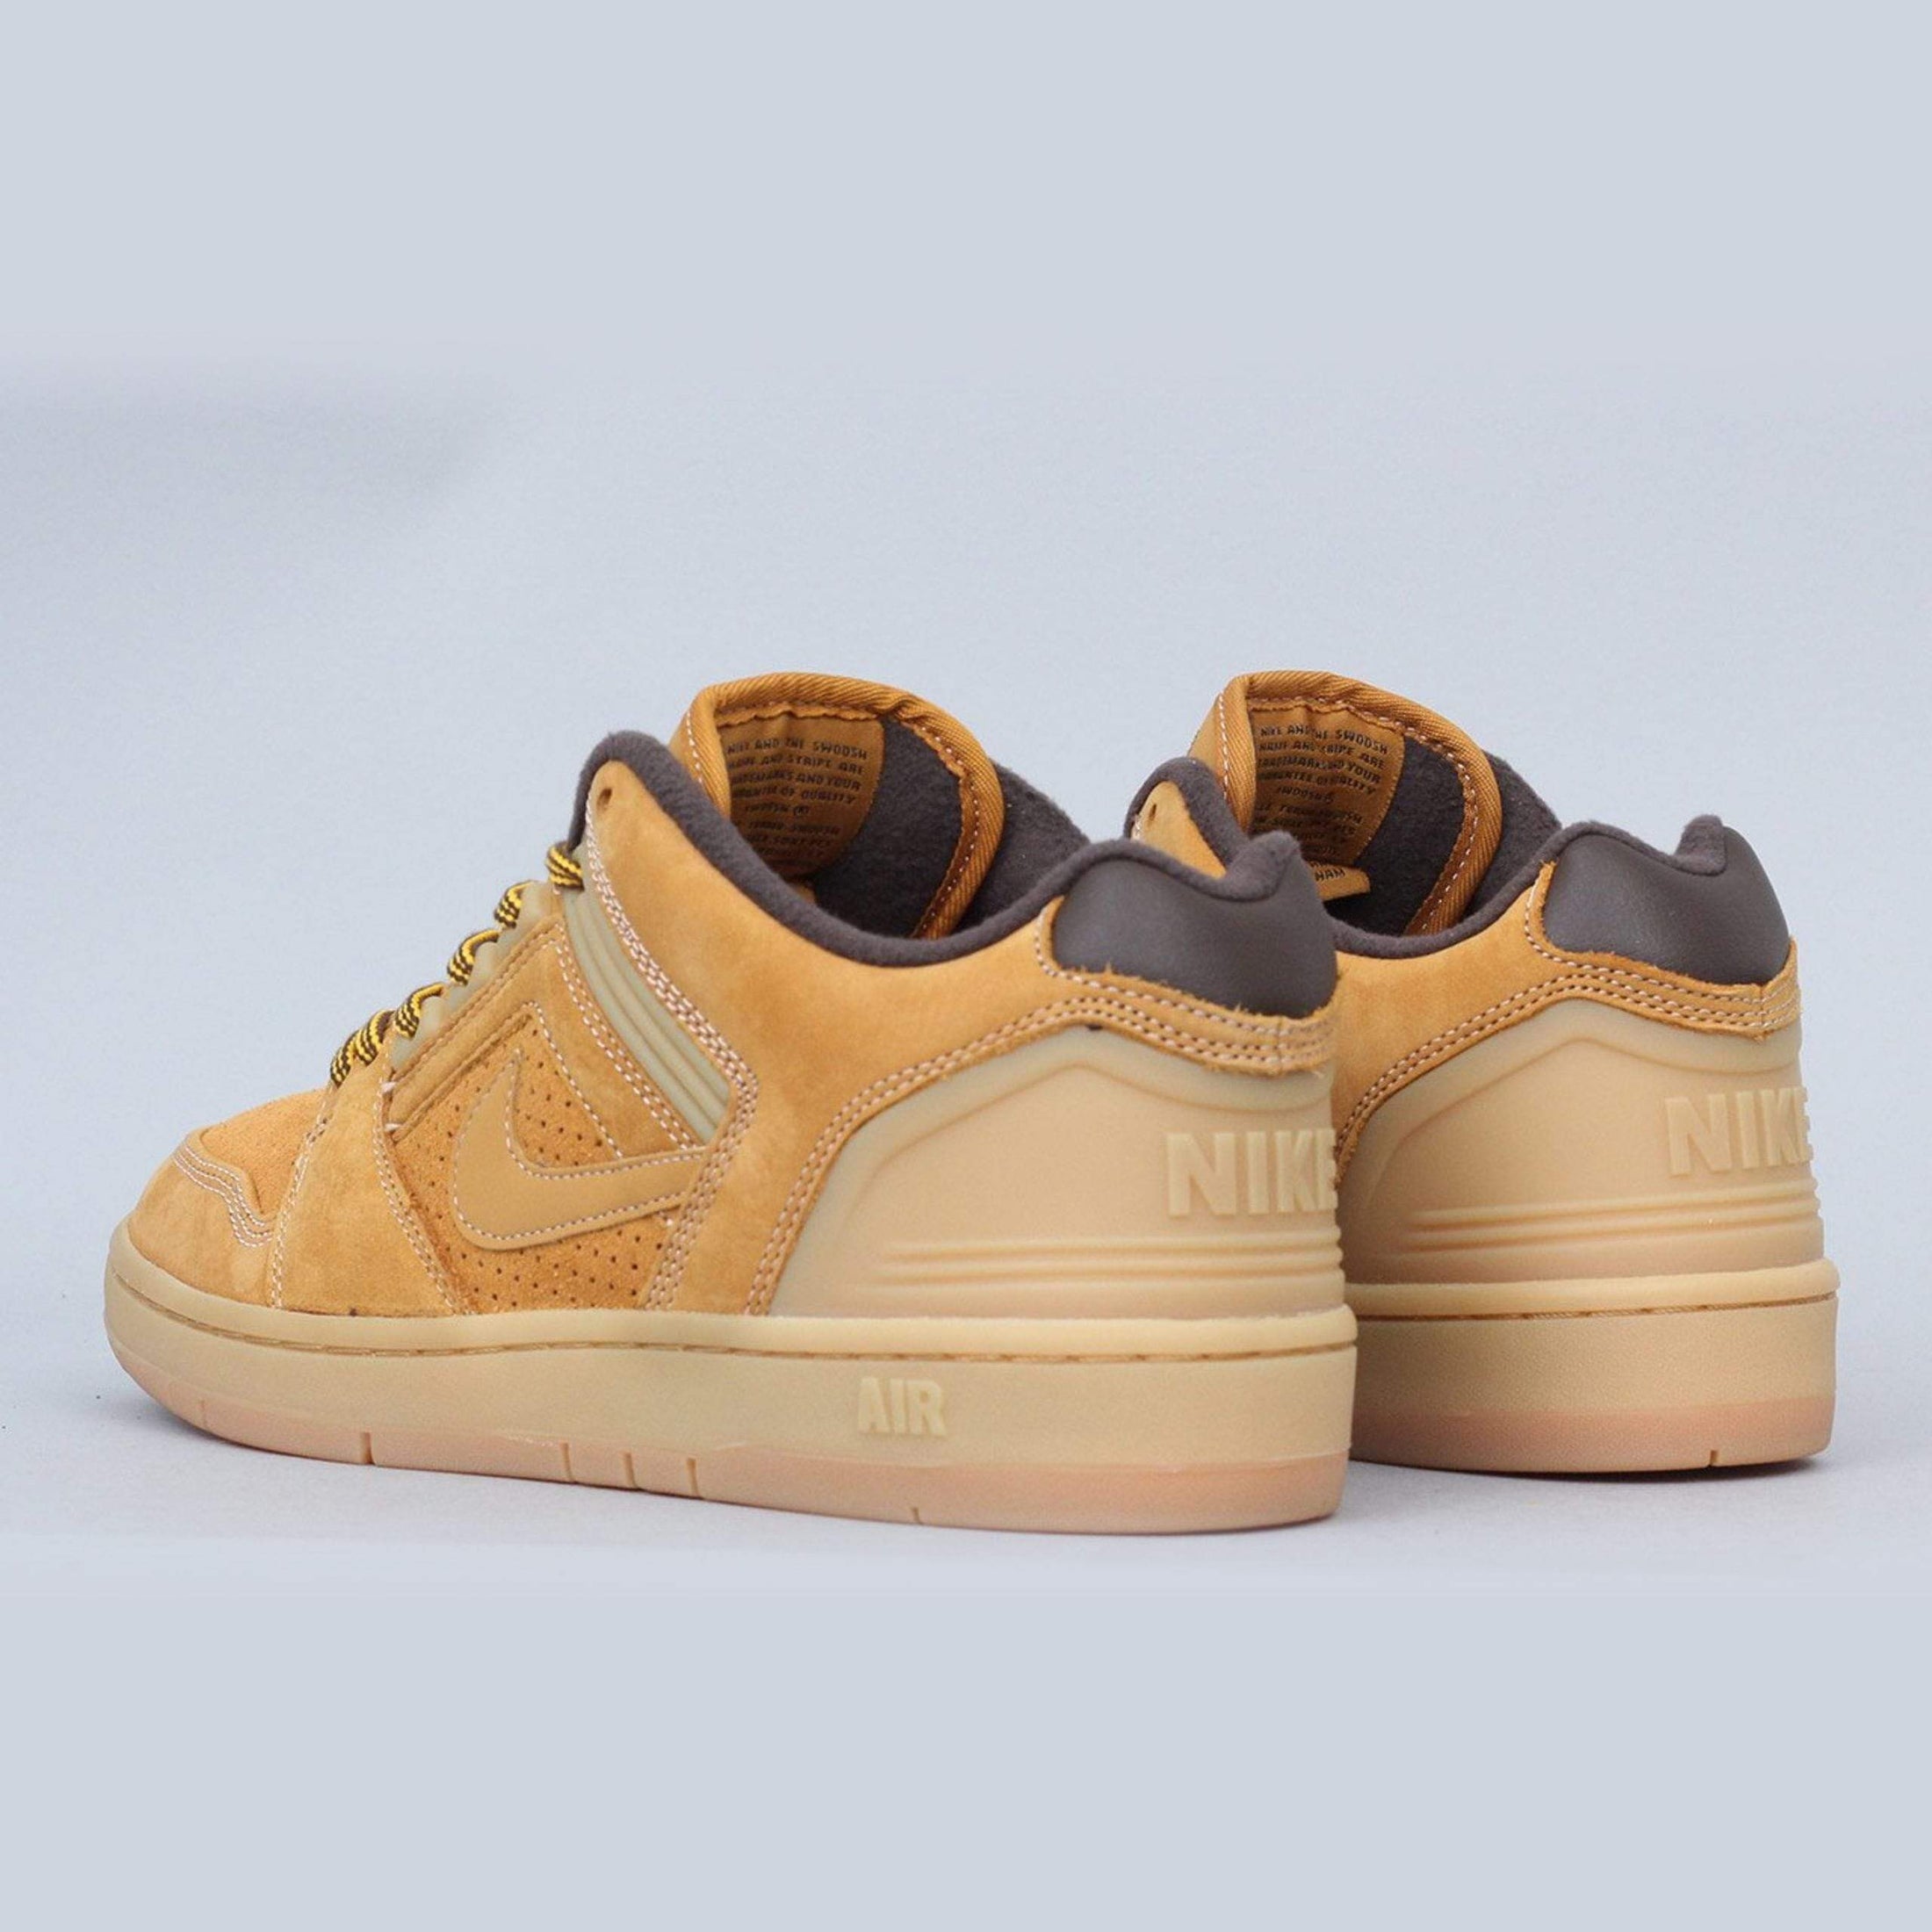 Nike SB Air Force II Low Premium Shoes Bronze / Bronze - Baroque Brown